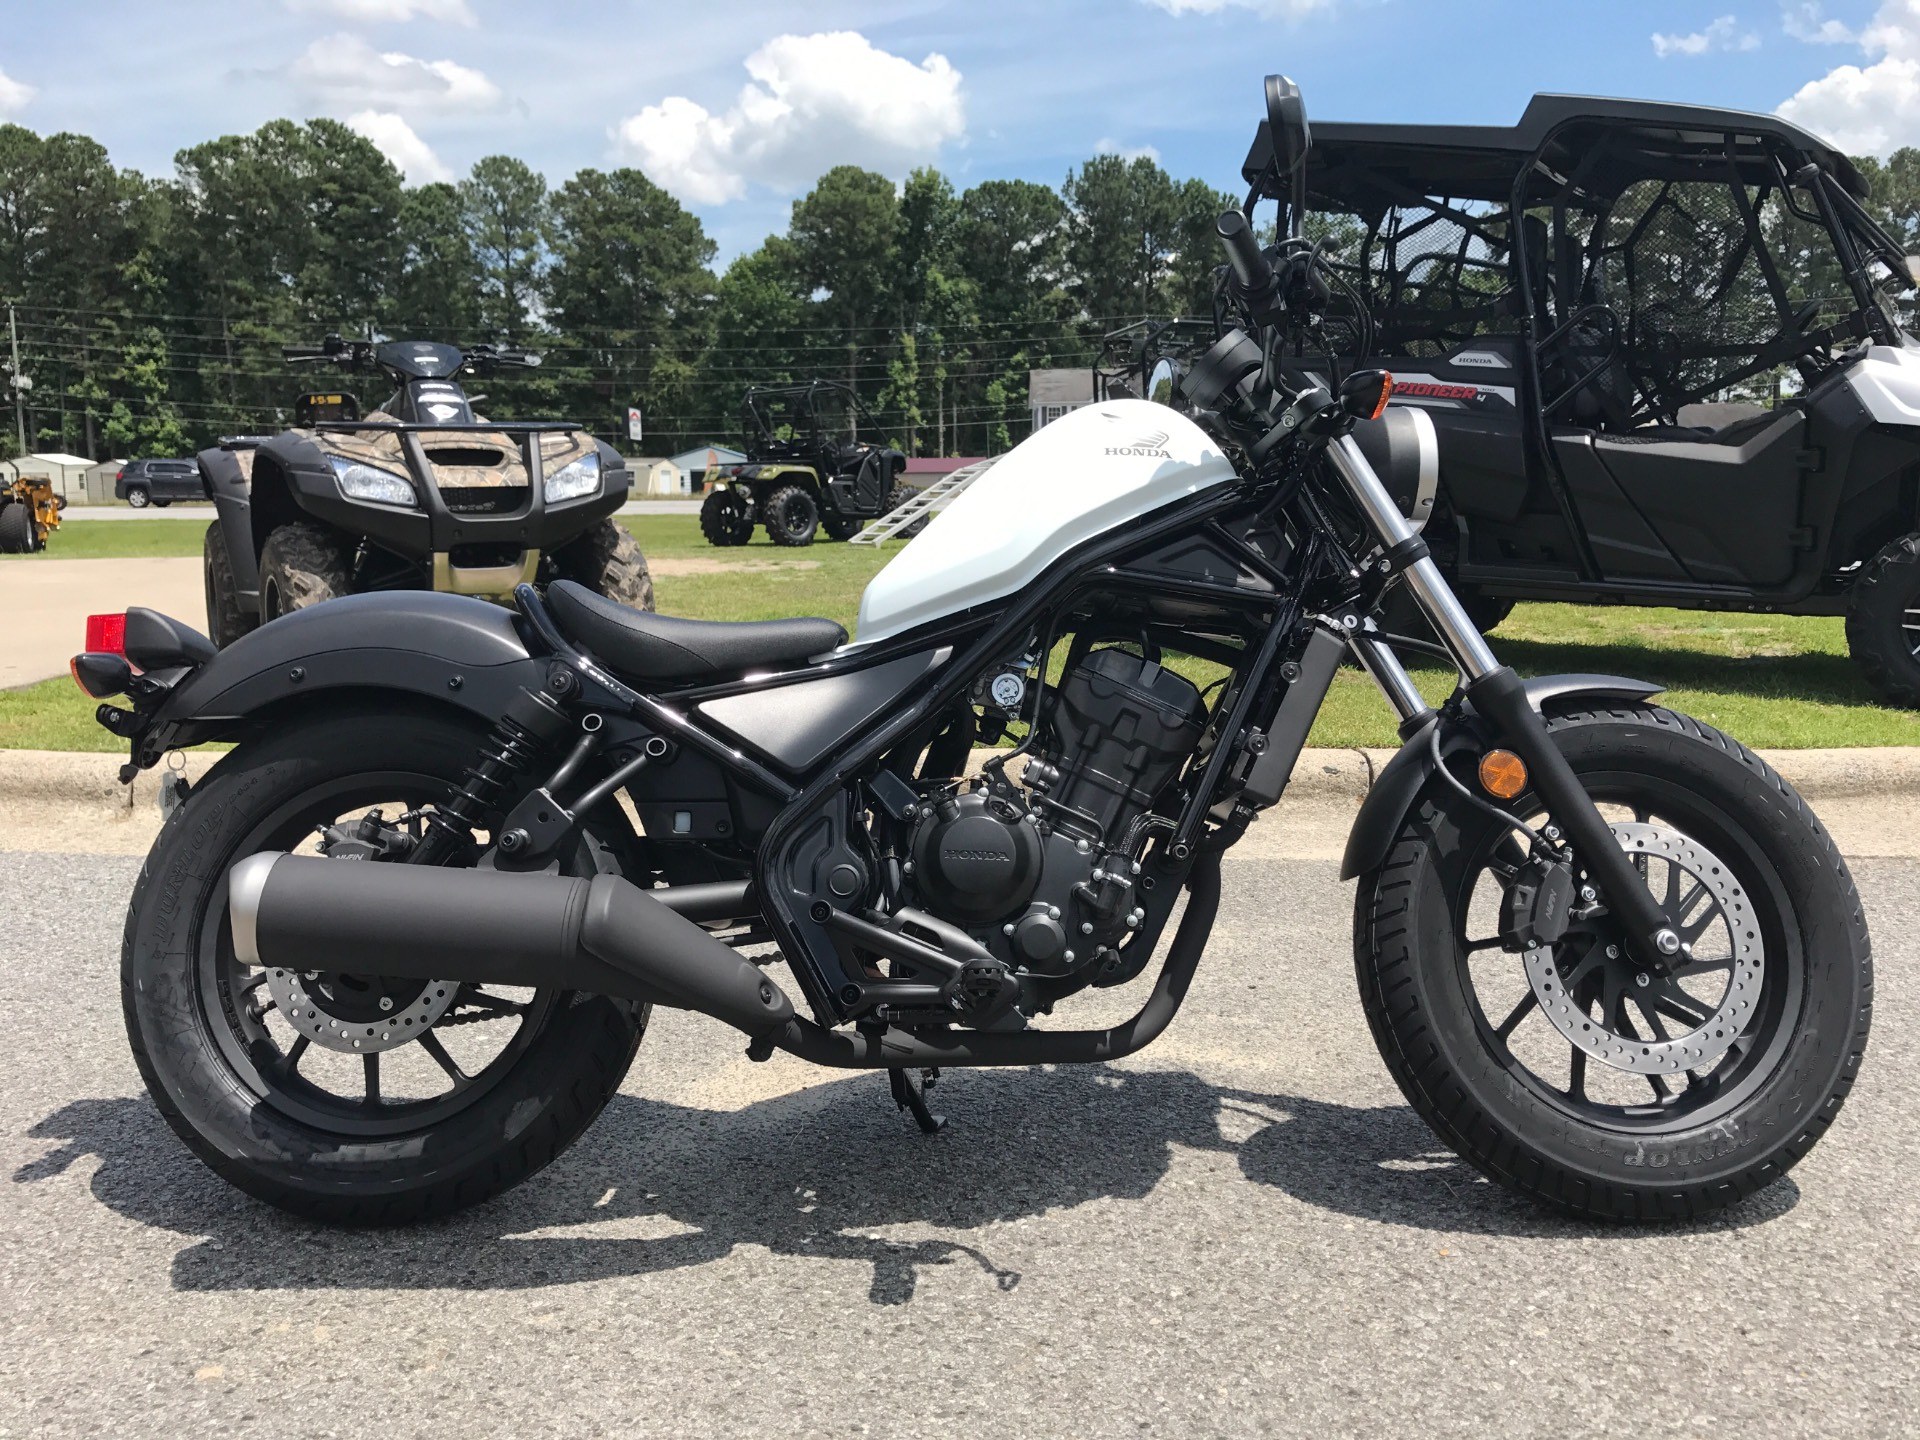 New 2017 Honda Rebel 300 Motorcycles in Greenville, NC Stock Number N/A